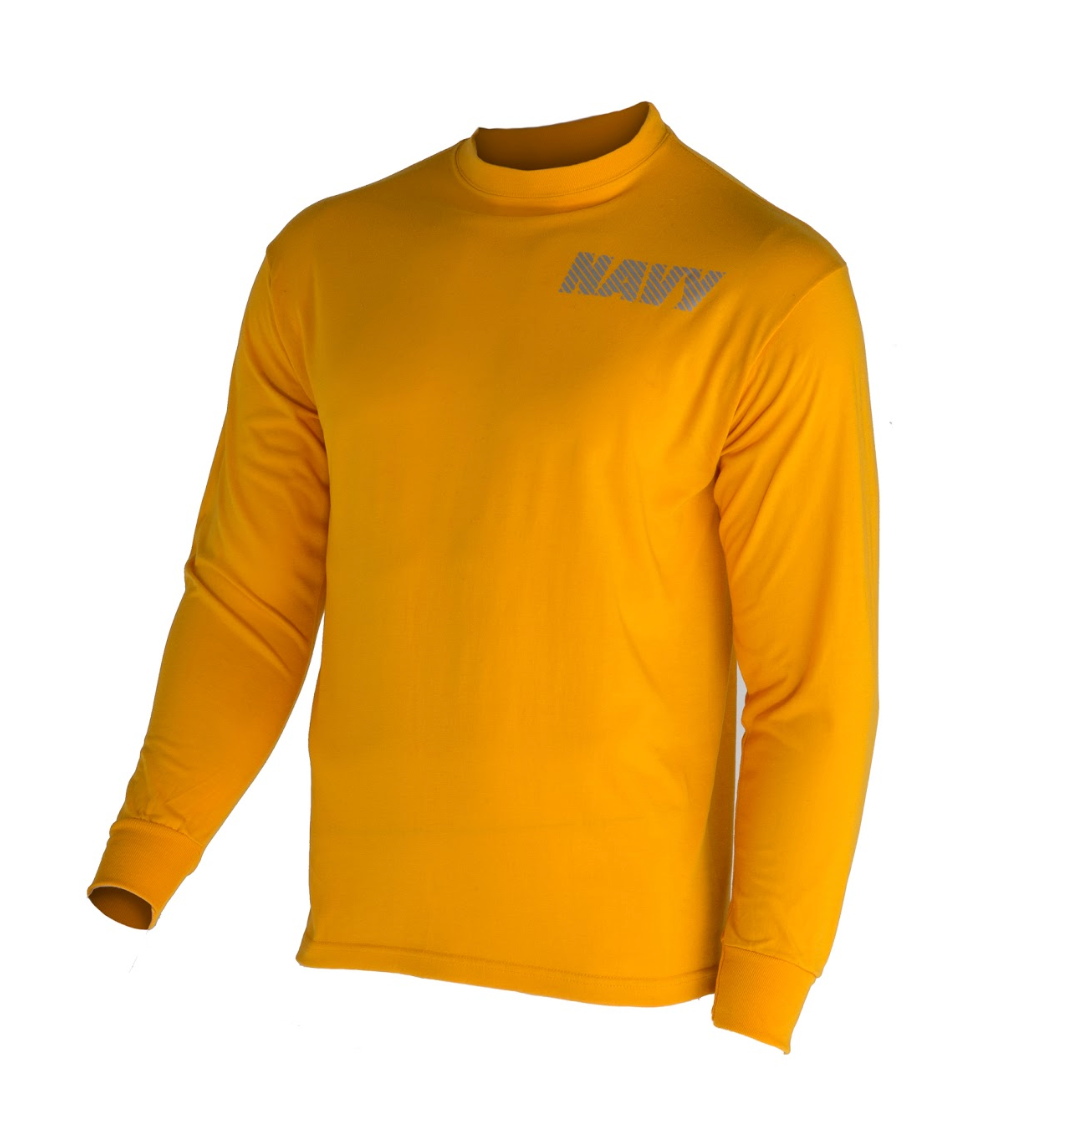 NAVY PT Yellow Long Sleeve T-Shirt | Uniform Trading Company